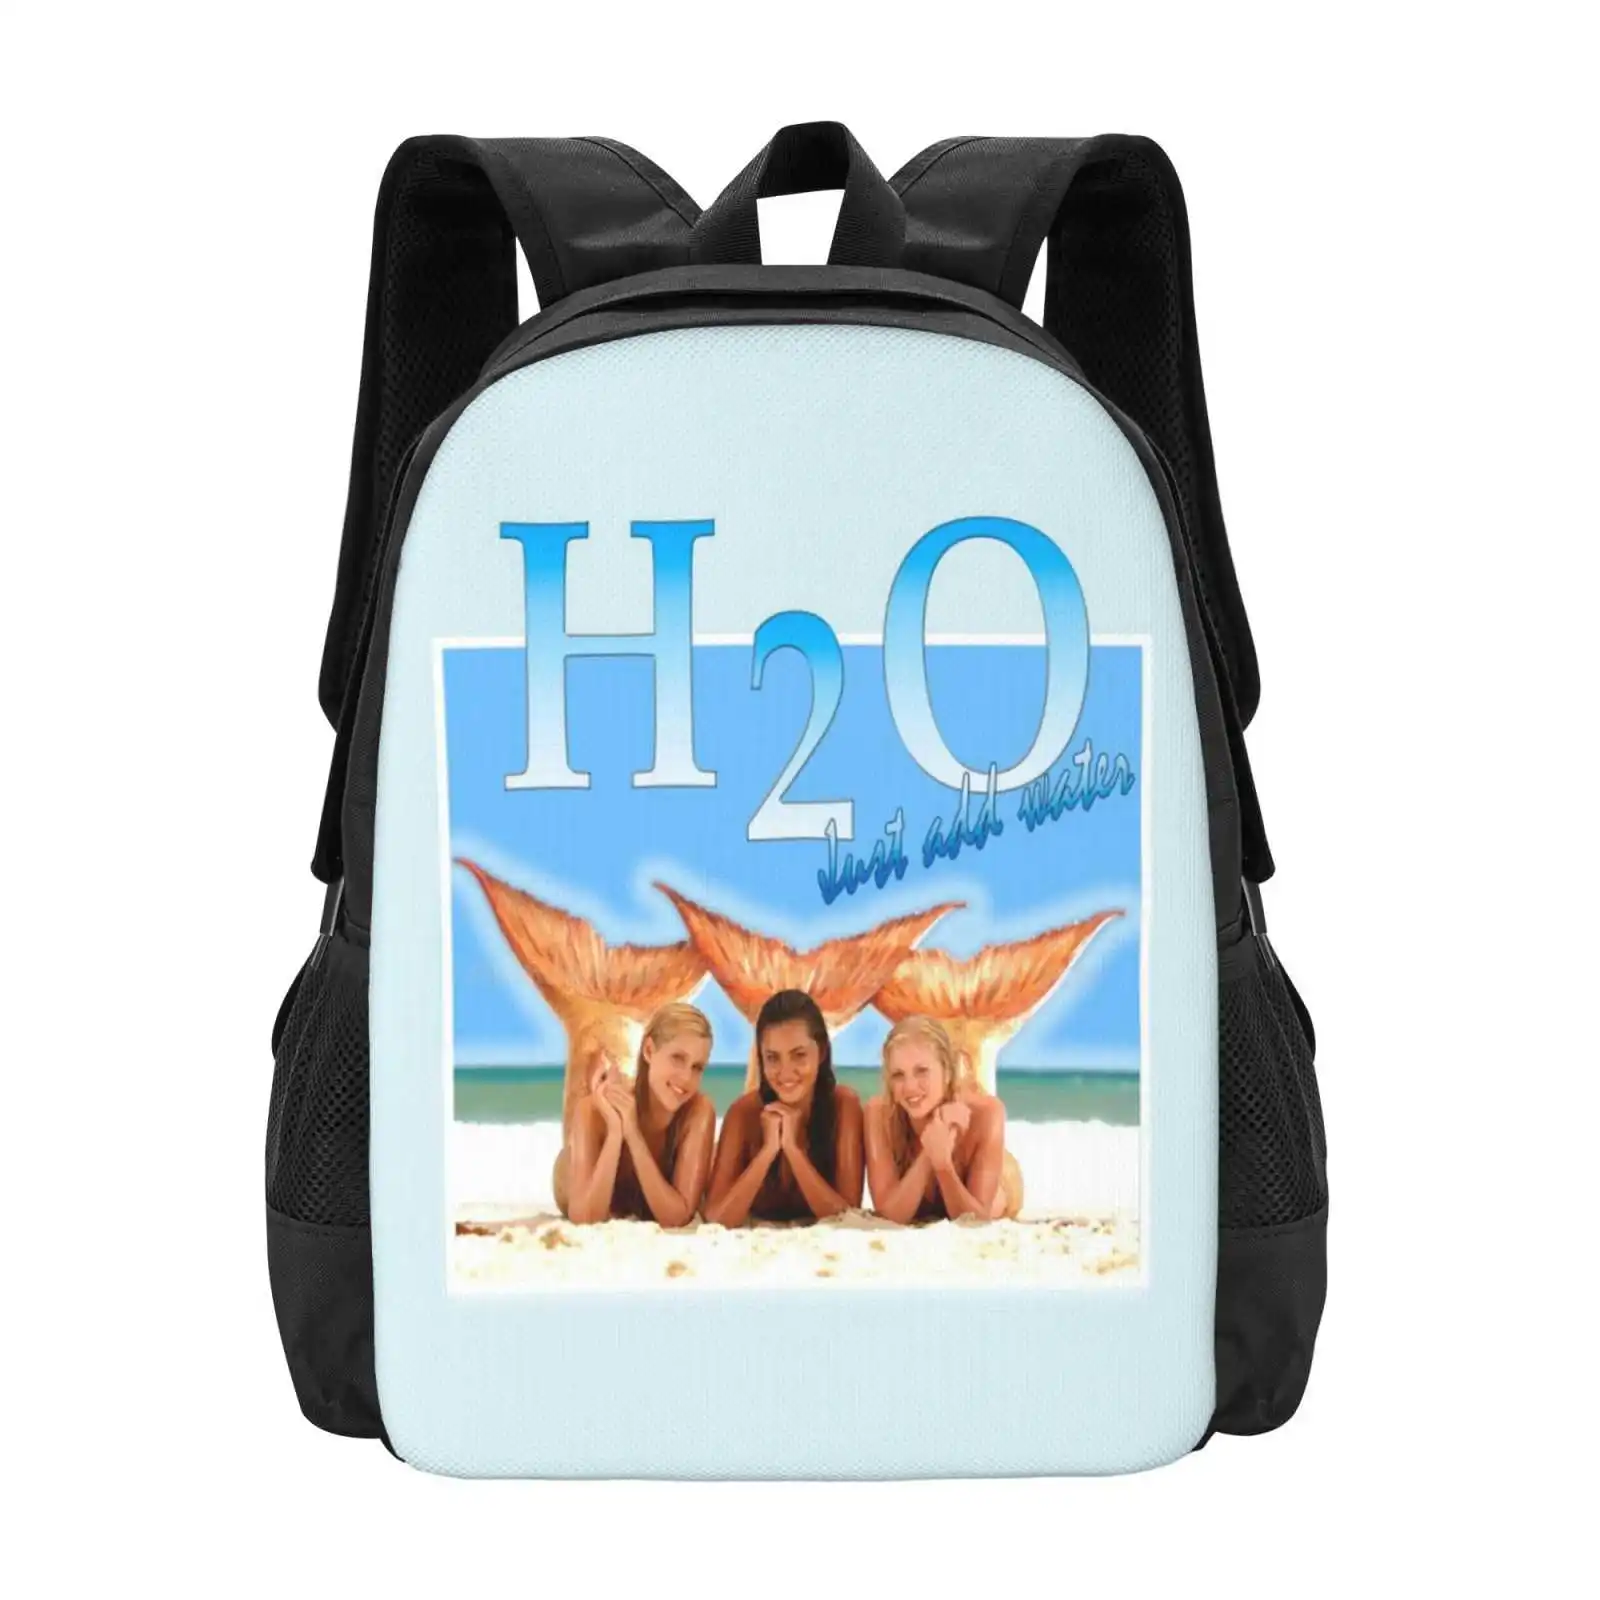 

H2O Teen College Student Backpack Pattern Design Bags H20 Just Add Water Siren Indiana Evans Cariba Heine Phoebe Tonkin Mako